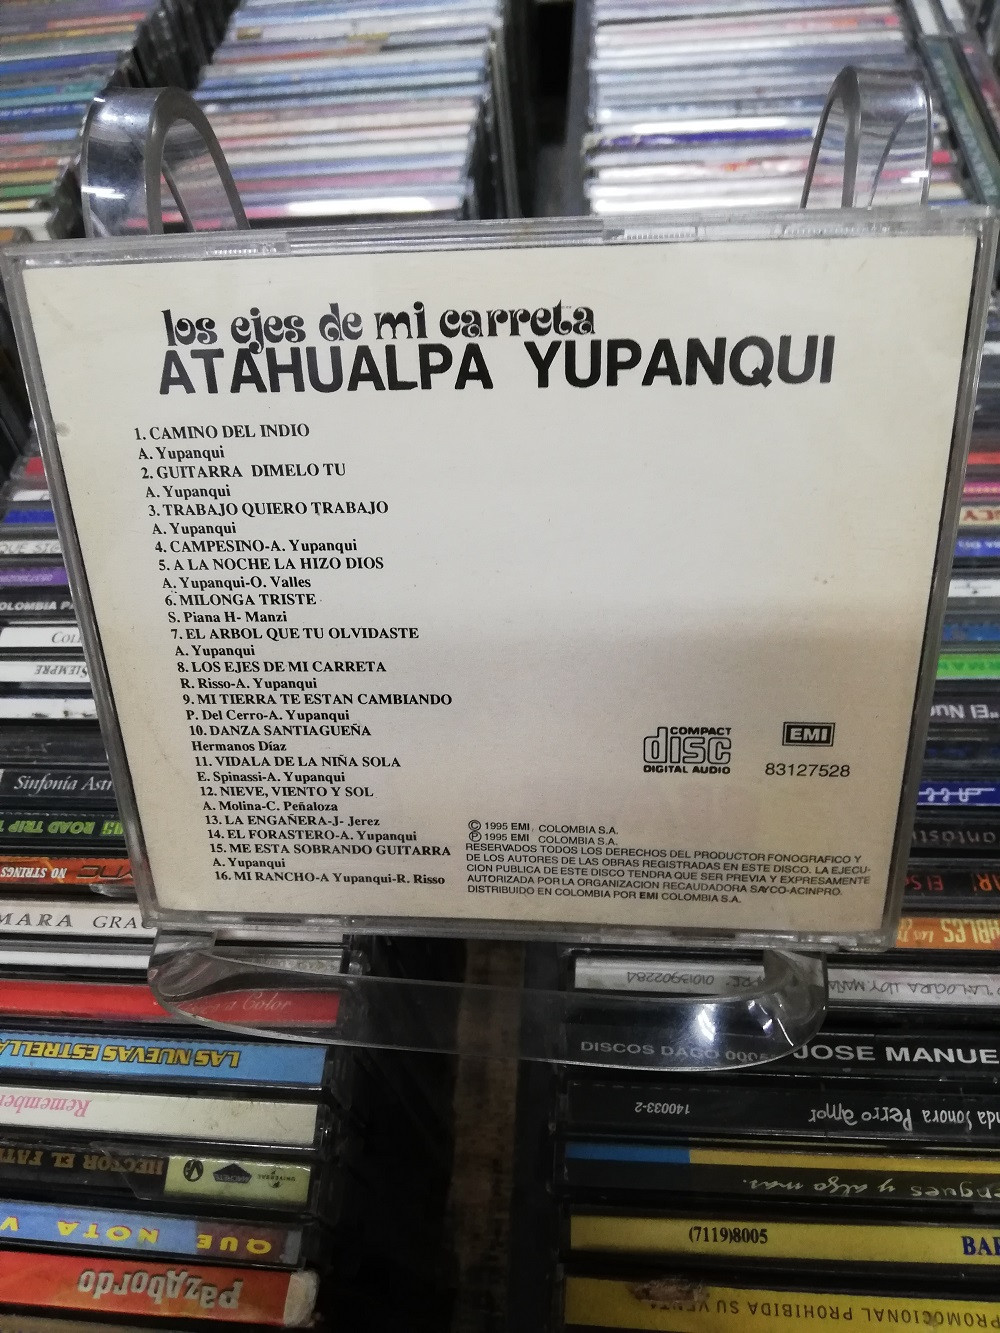 Imagen CD ATAHUALPA YUPANQUI - LOS EJES DE MI CARRETA 2